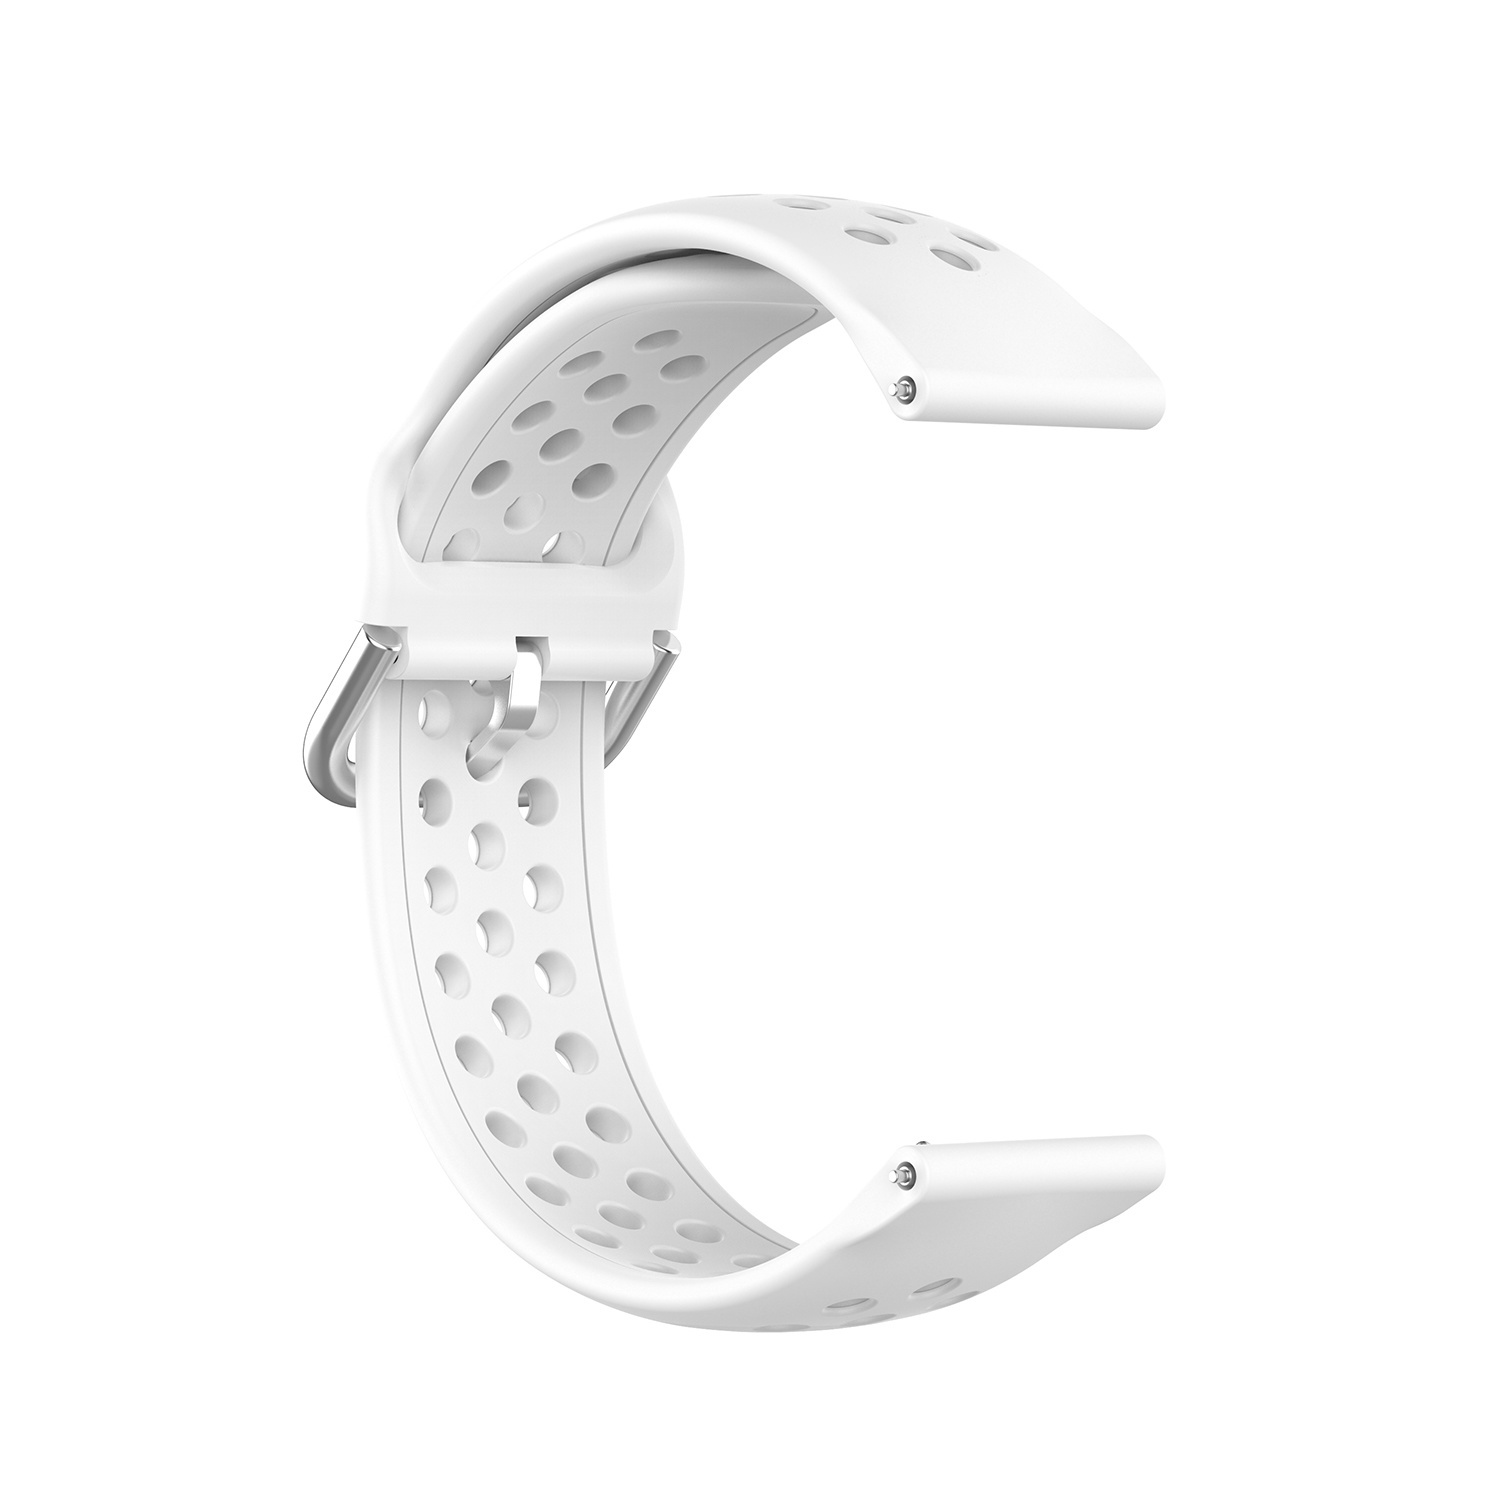 Cinturino doppia fibbia per Samsung Galaxy Watch - bianco